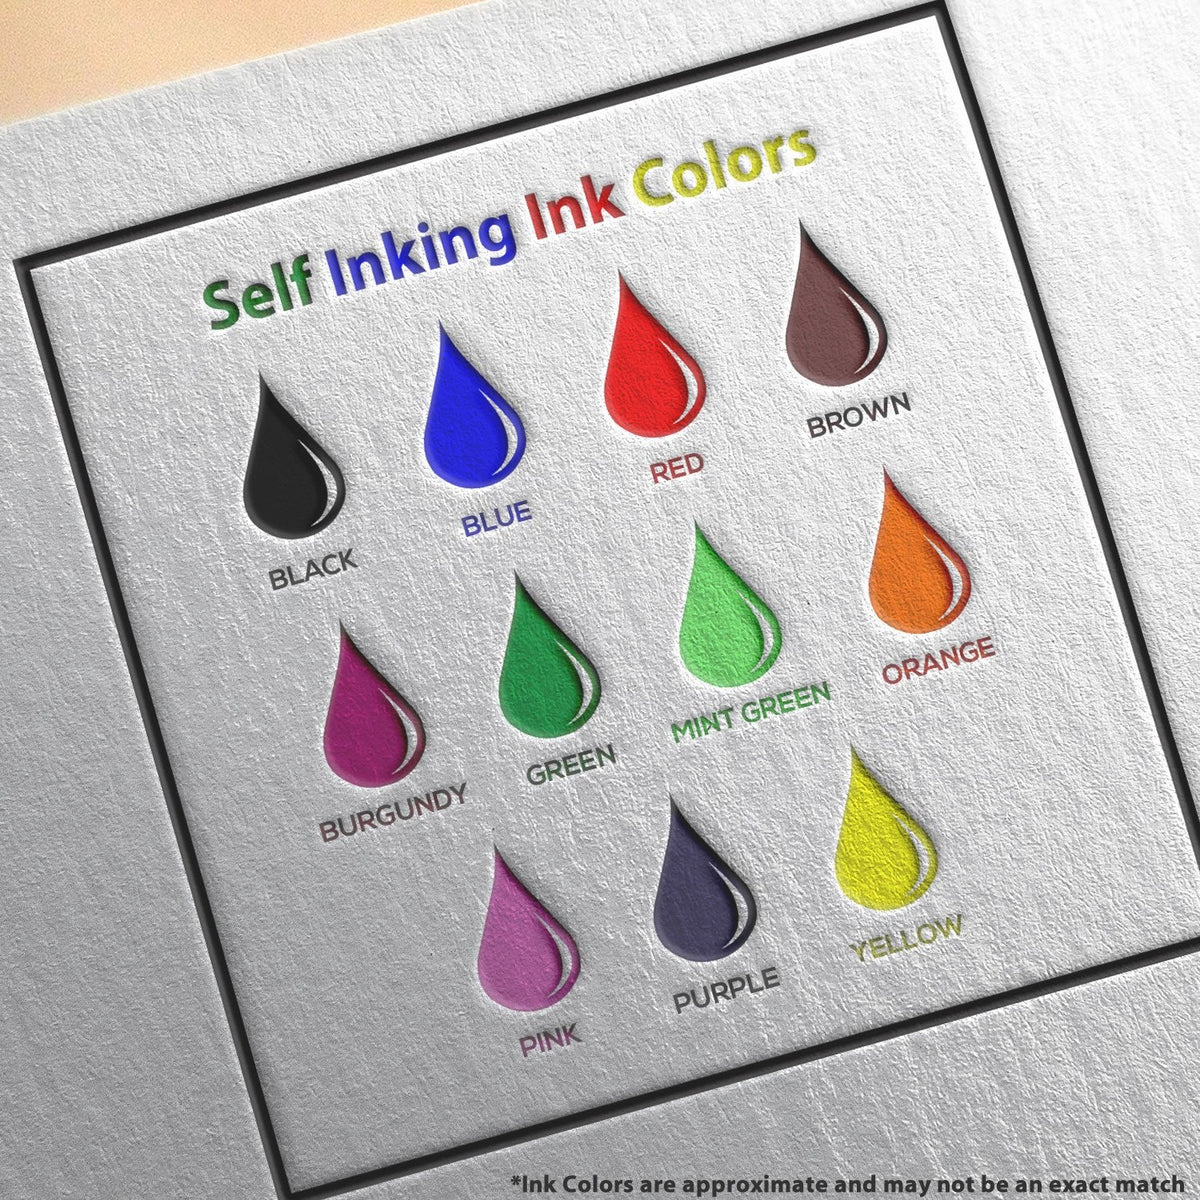 Self-Inking Return for Better Address Stamp Ink Color Options